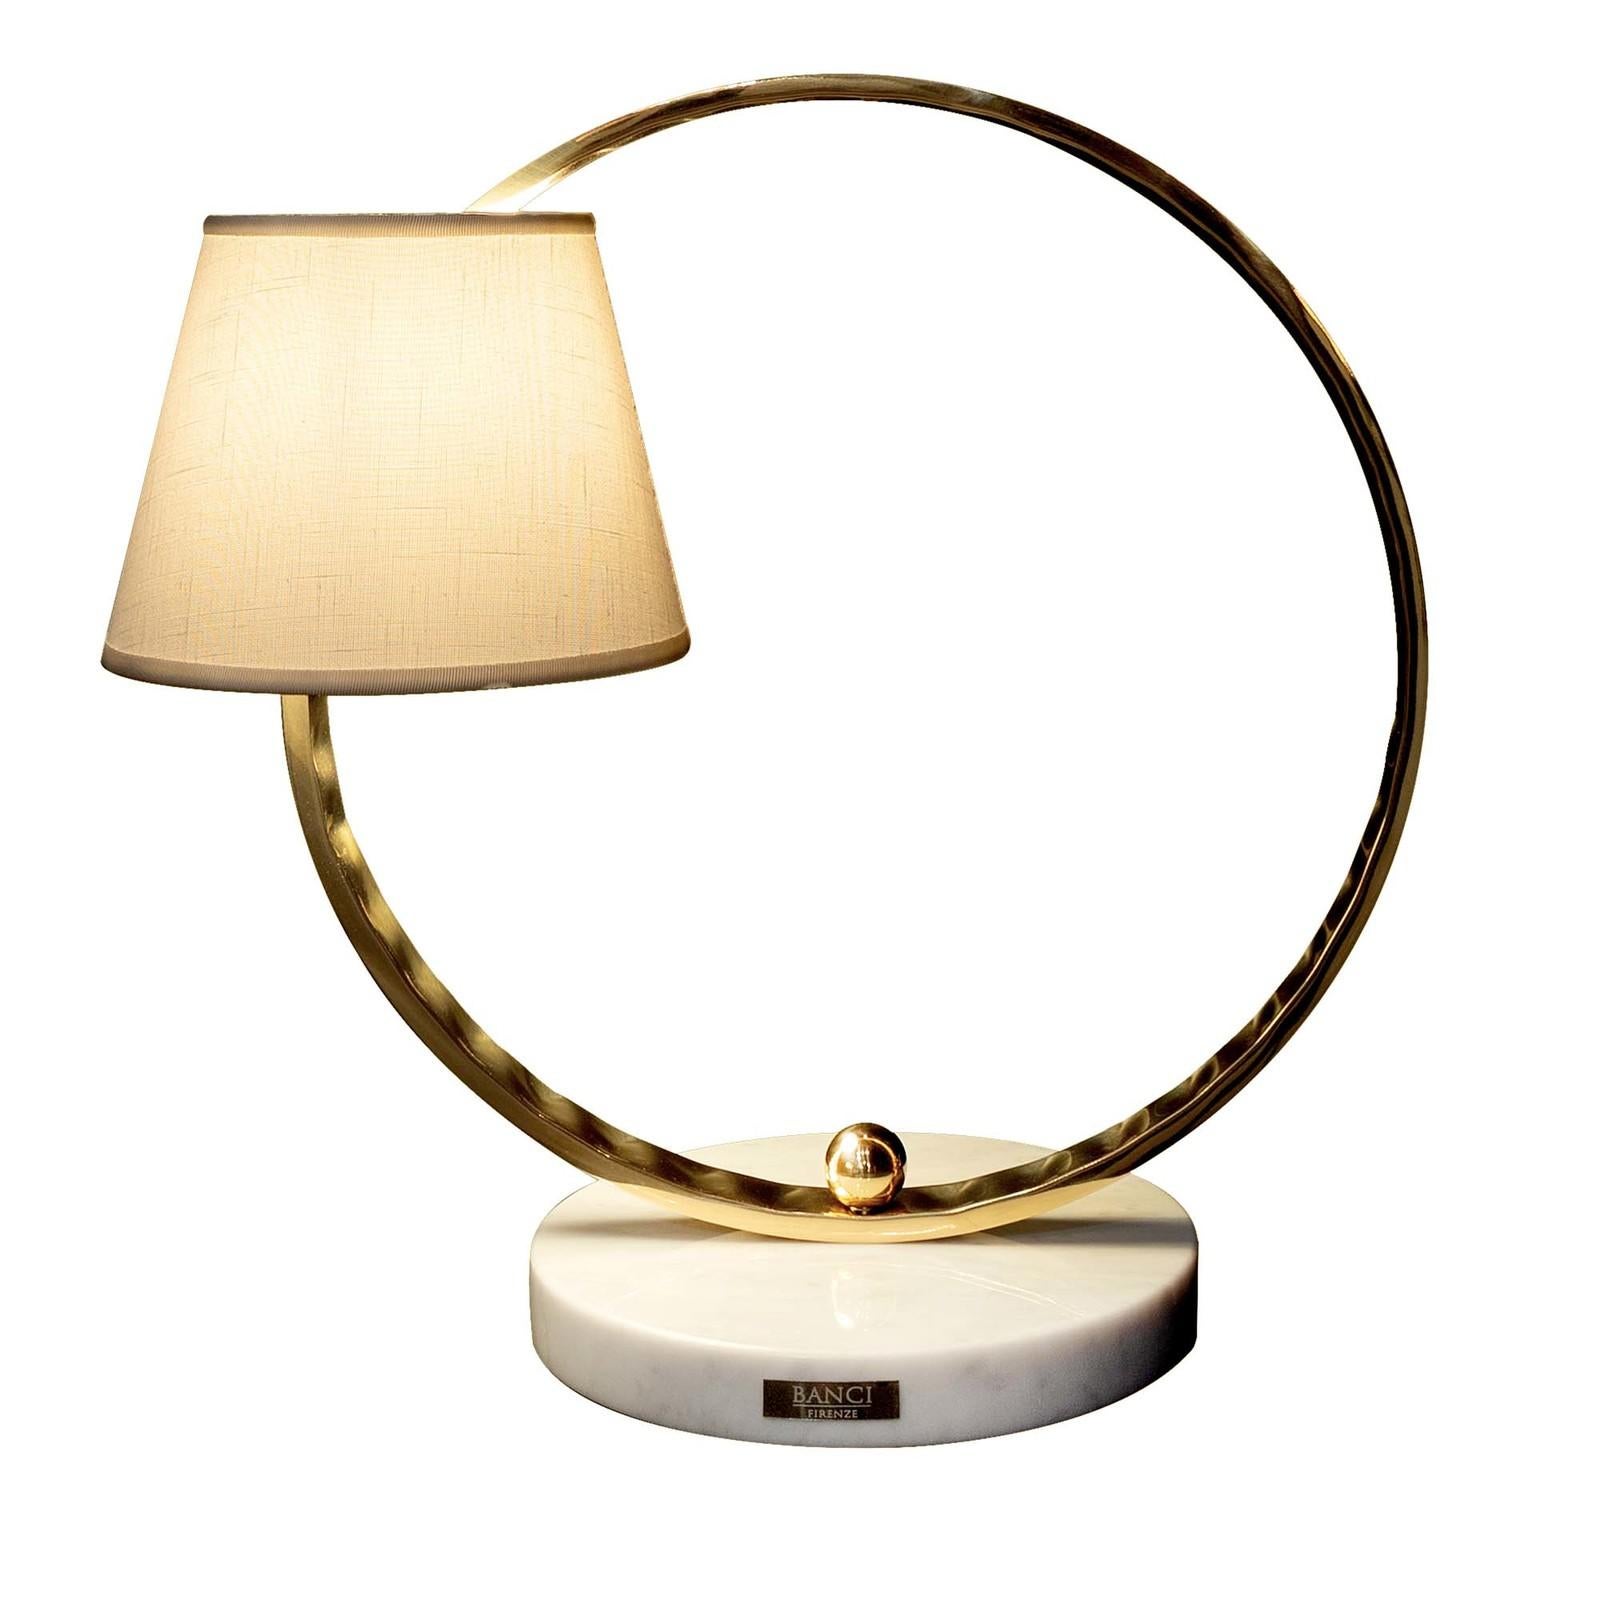 Open circle single light table lamp.